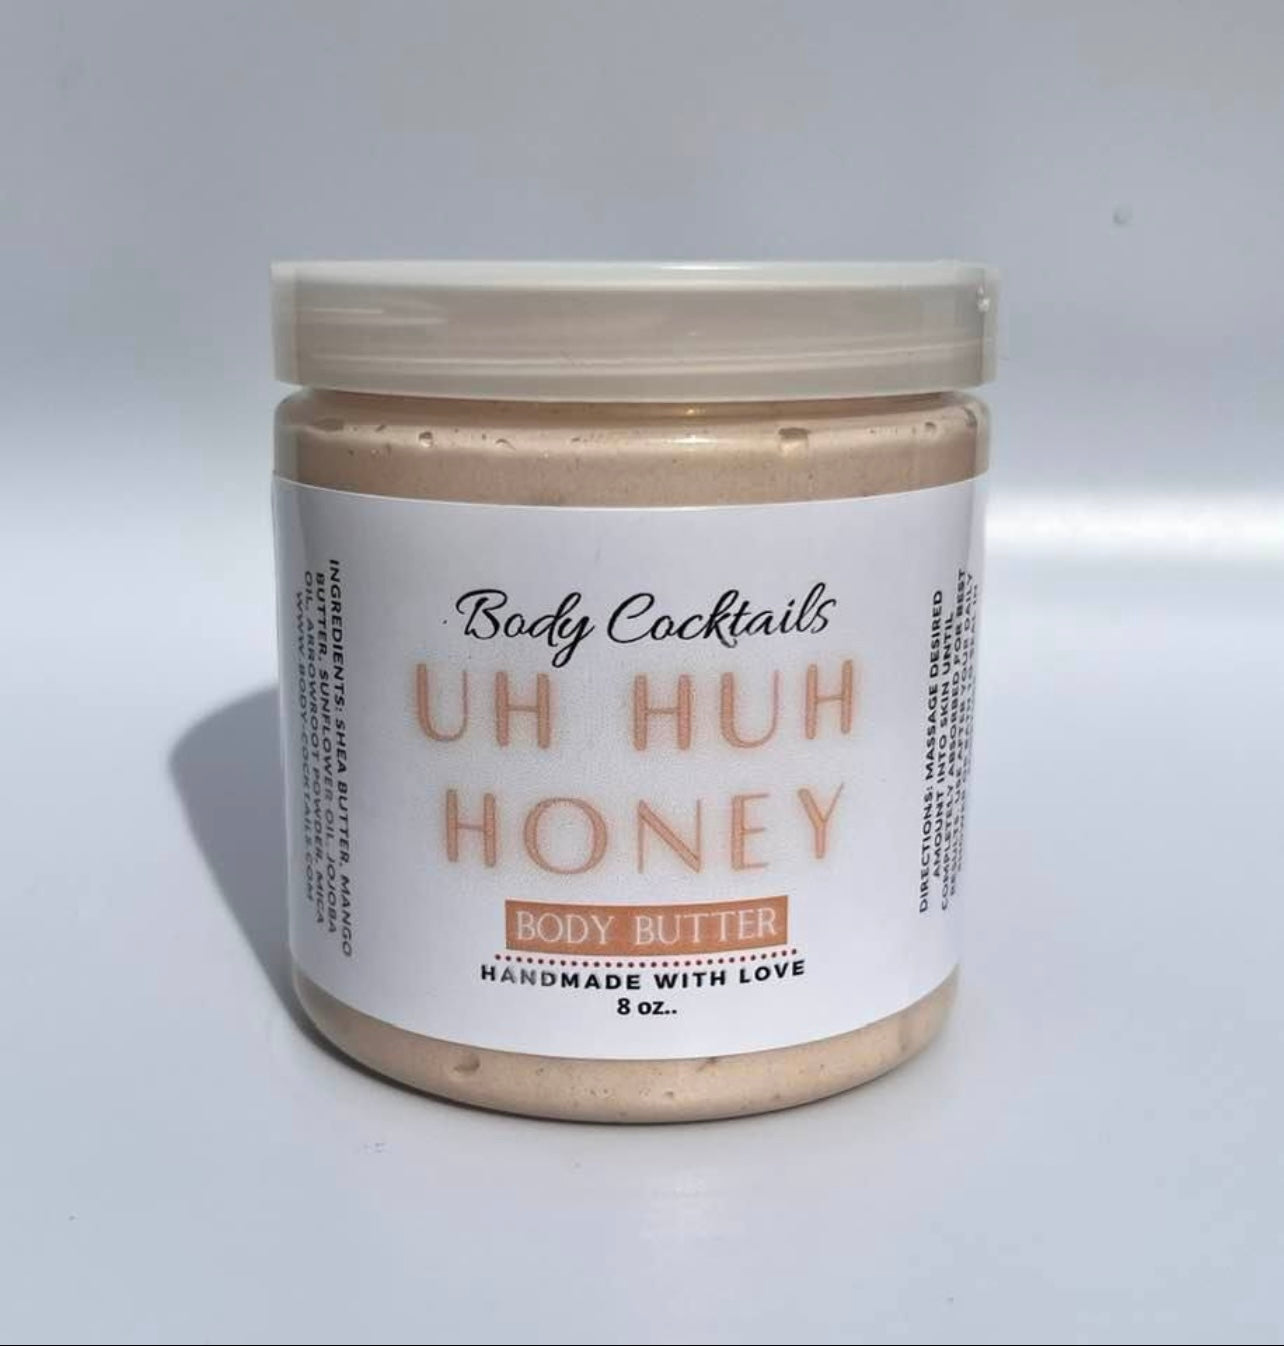 Uh-Huh Honey Body Butter